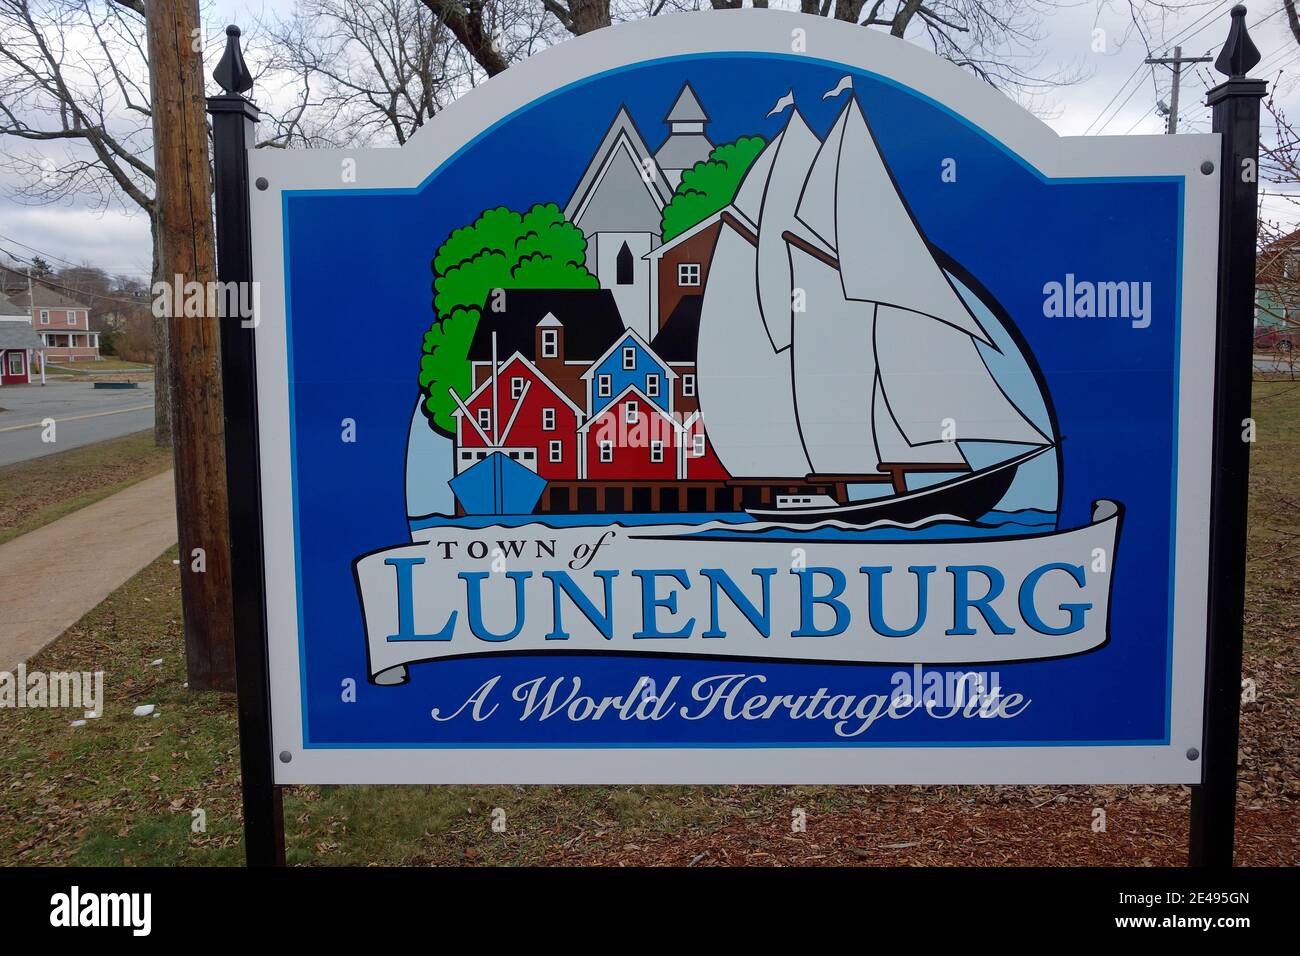 Town of Lunenburg sign, lunenburg, Nova Scotia, Canada Stock Photo